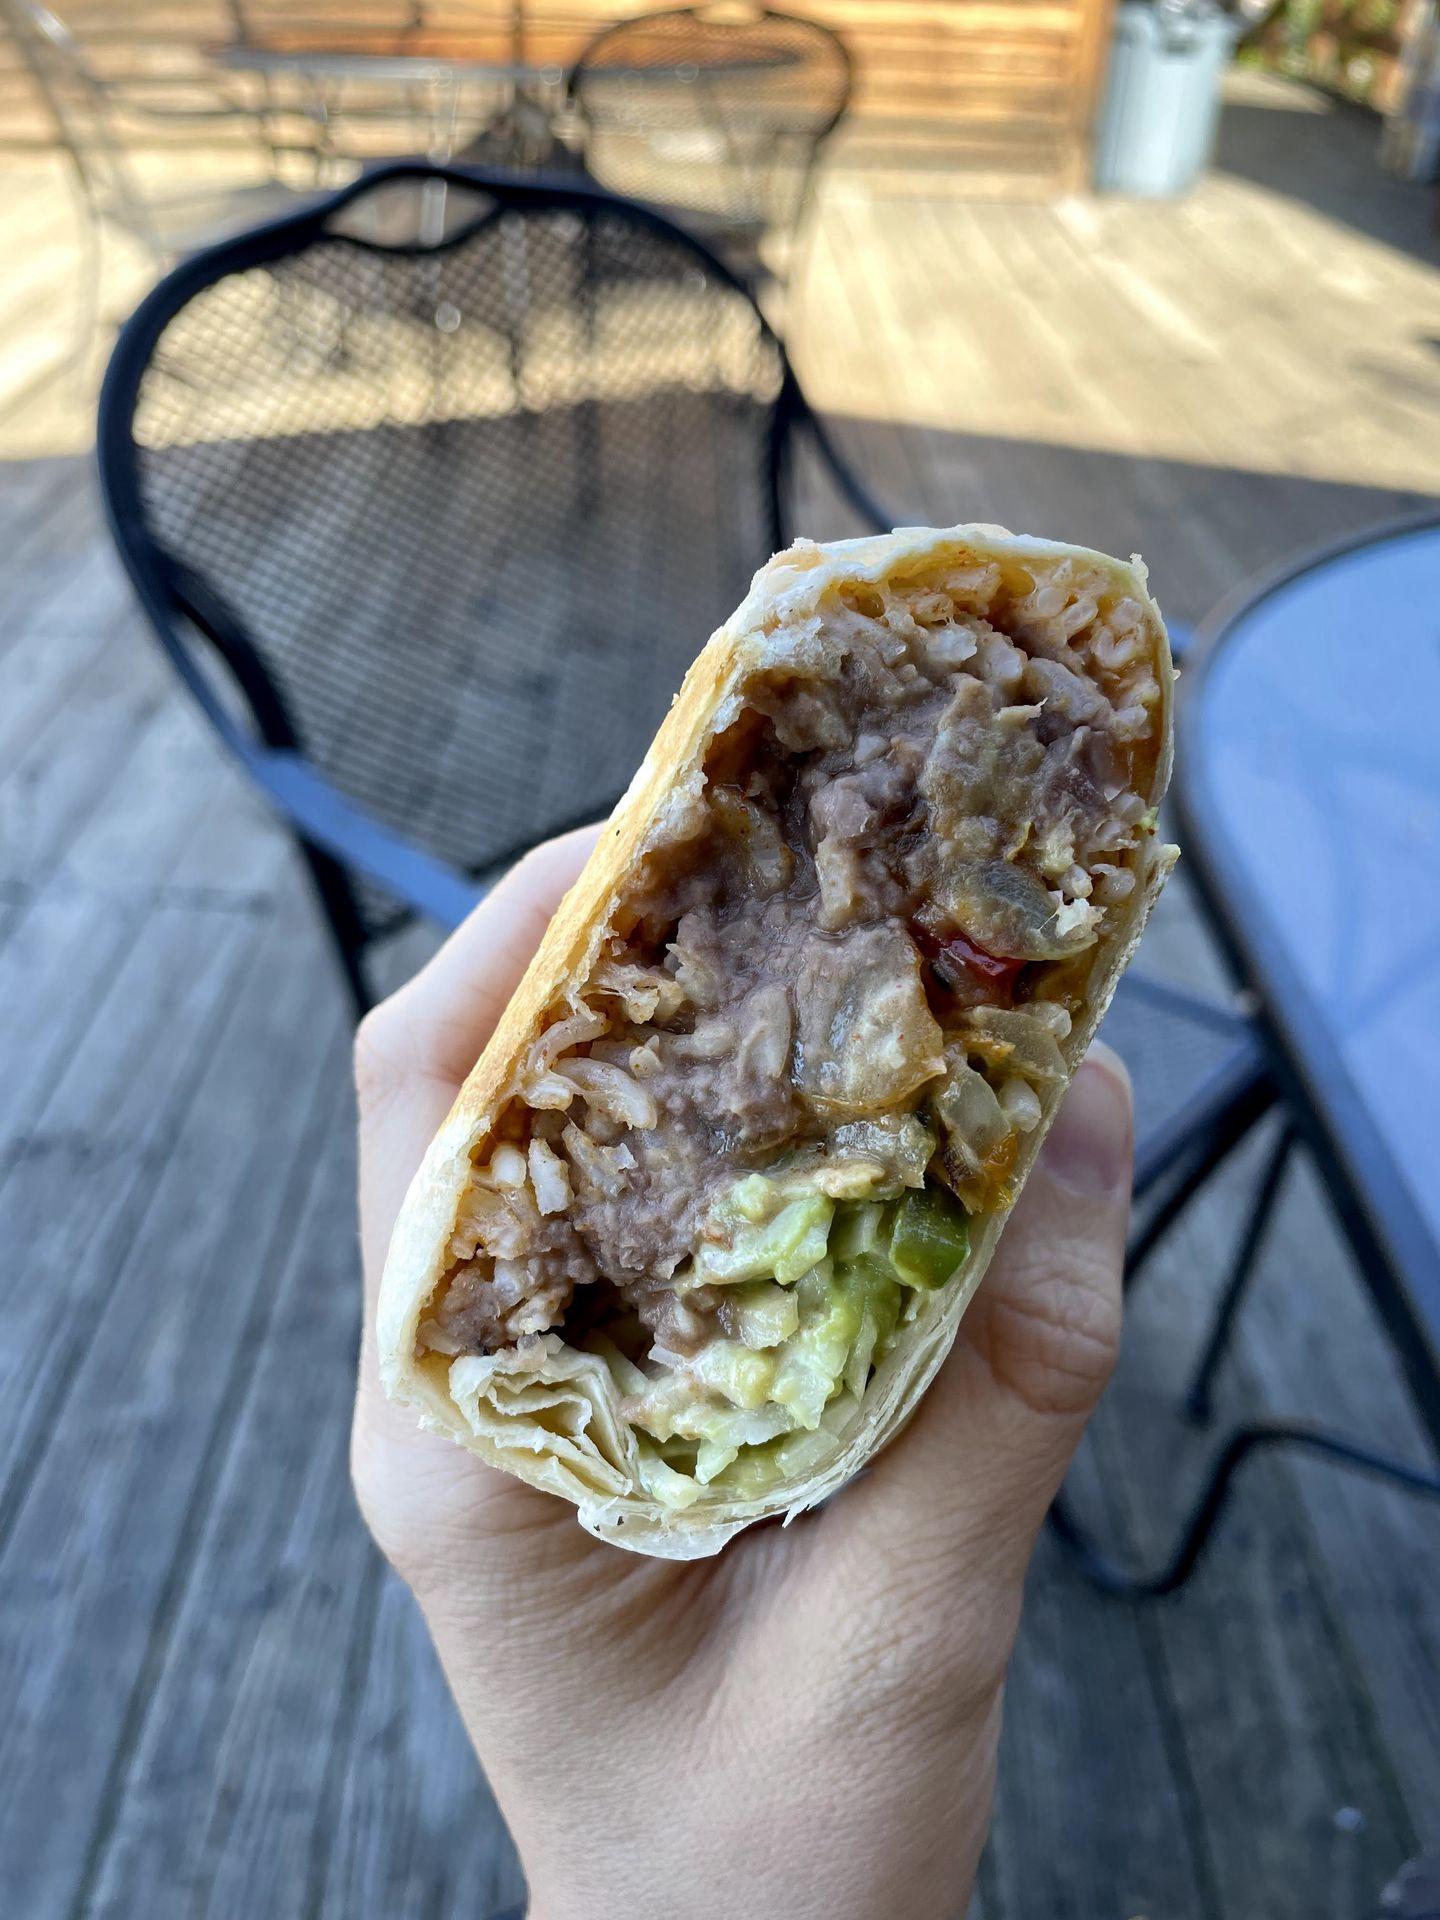 A close up of a burrito at the Burrito Bar at Breeze Hill.